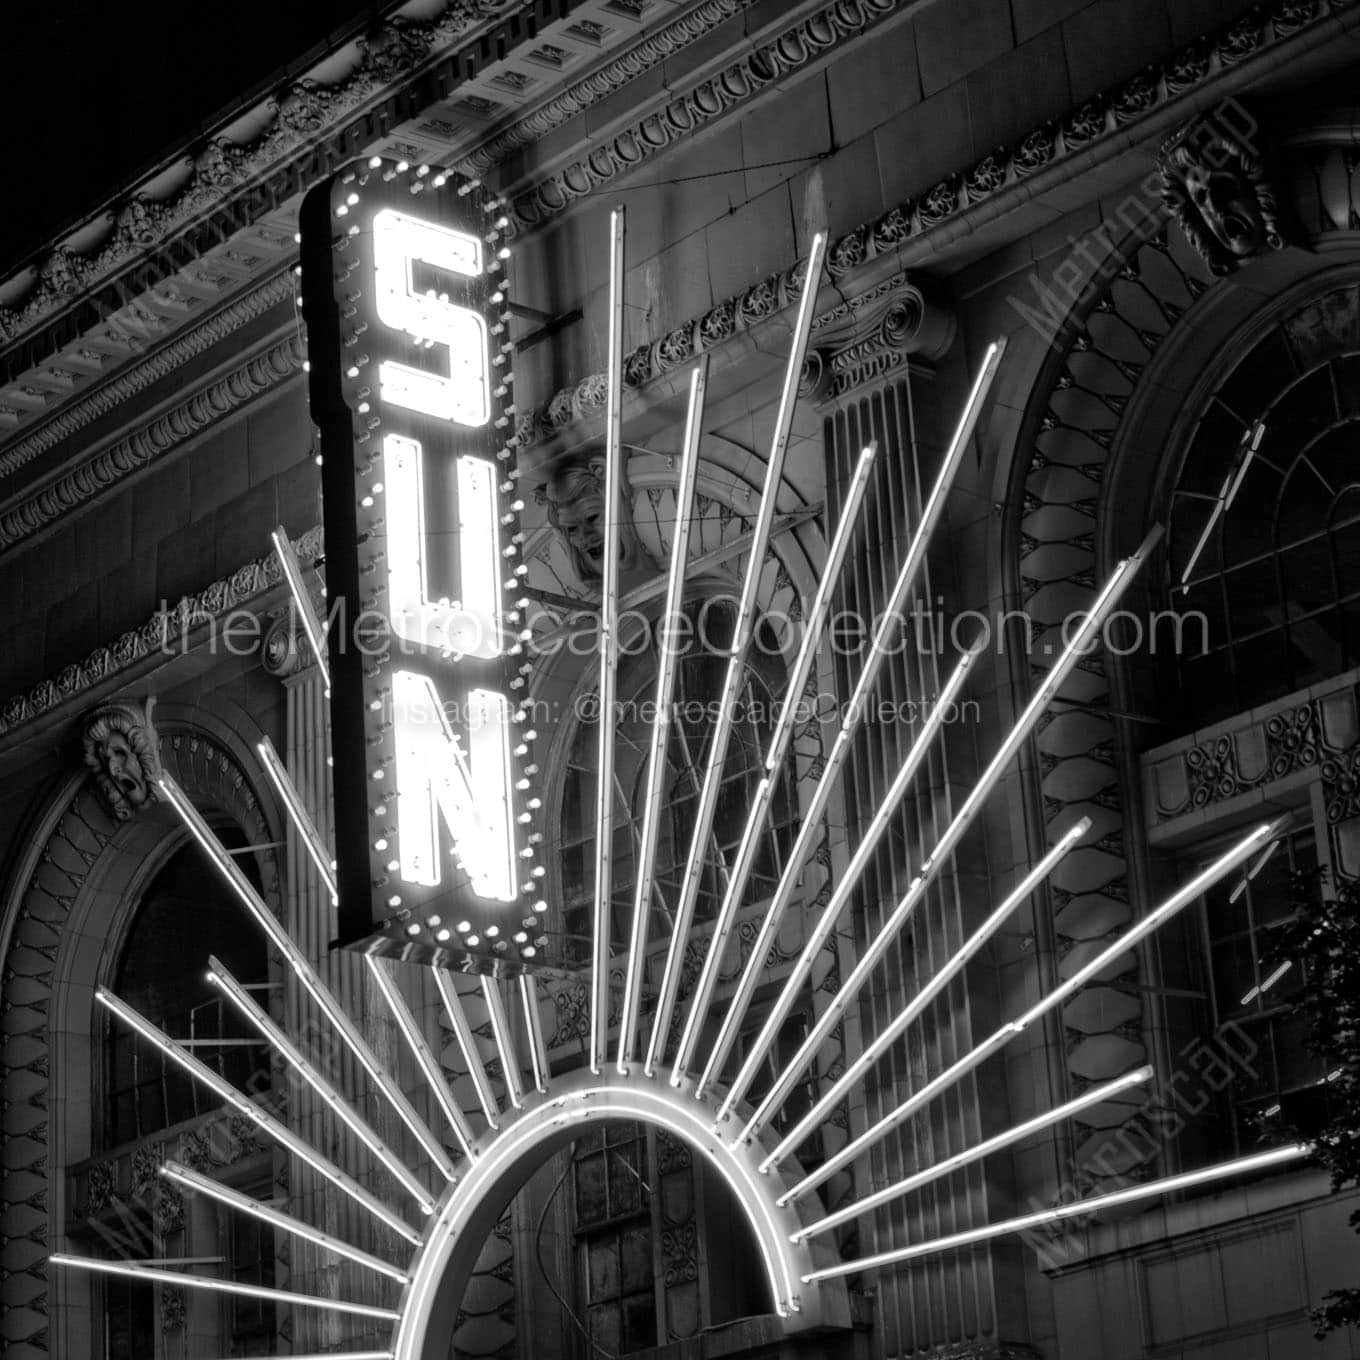 sun theater sign at night Black & White Wall Art